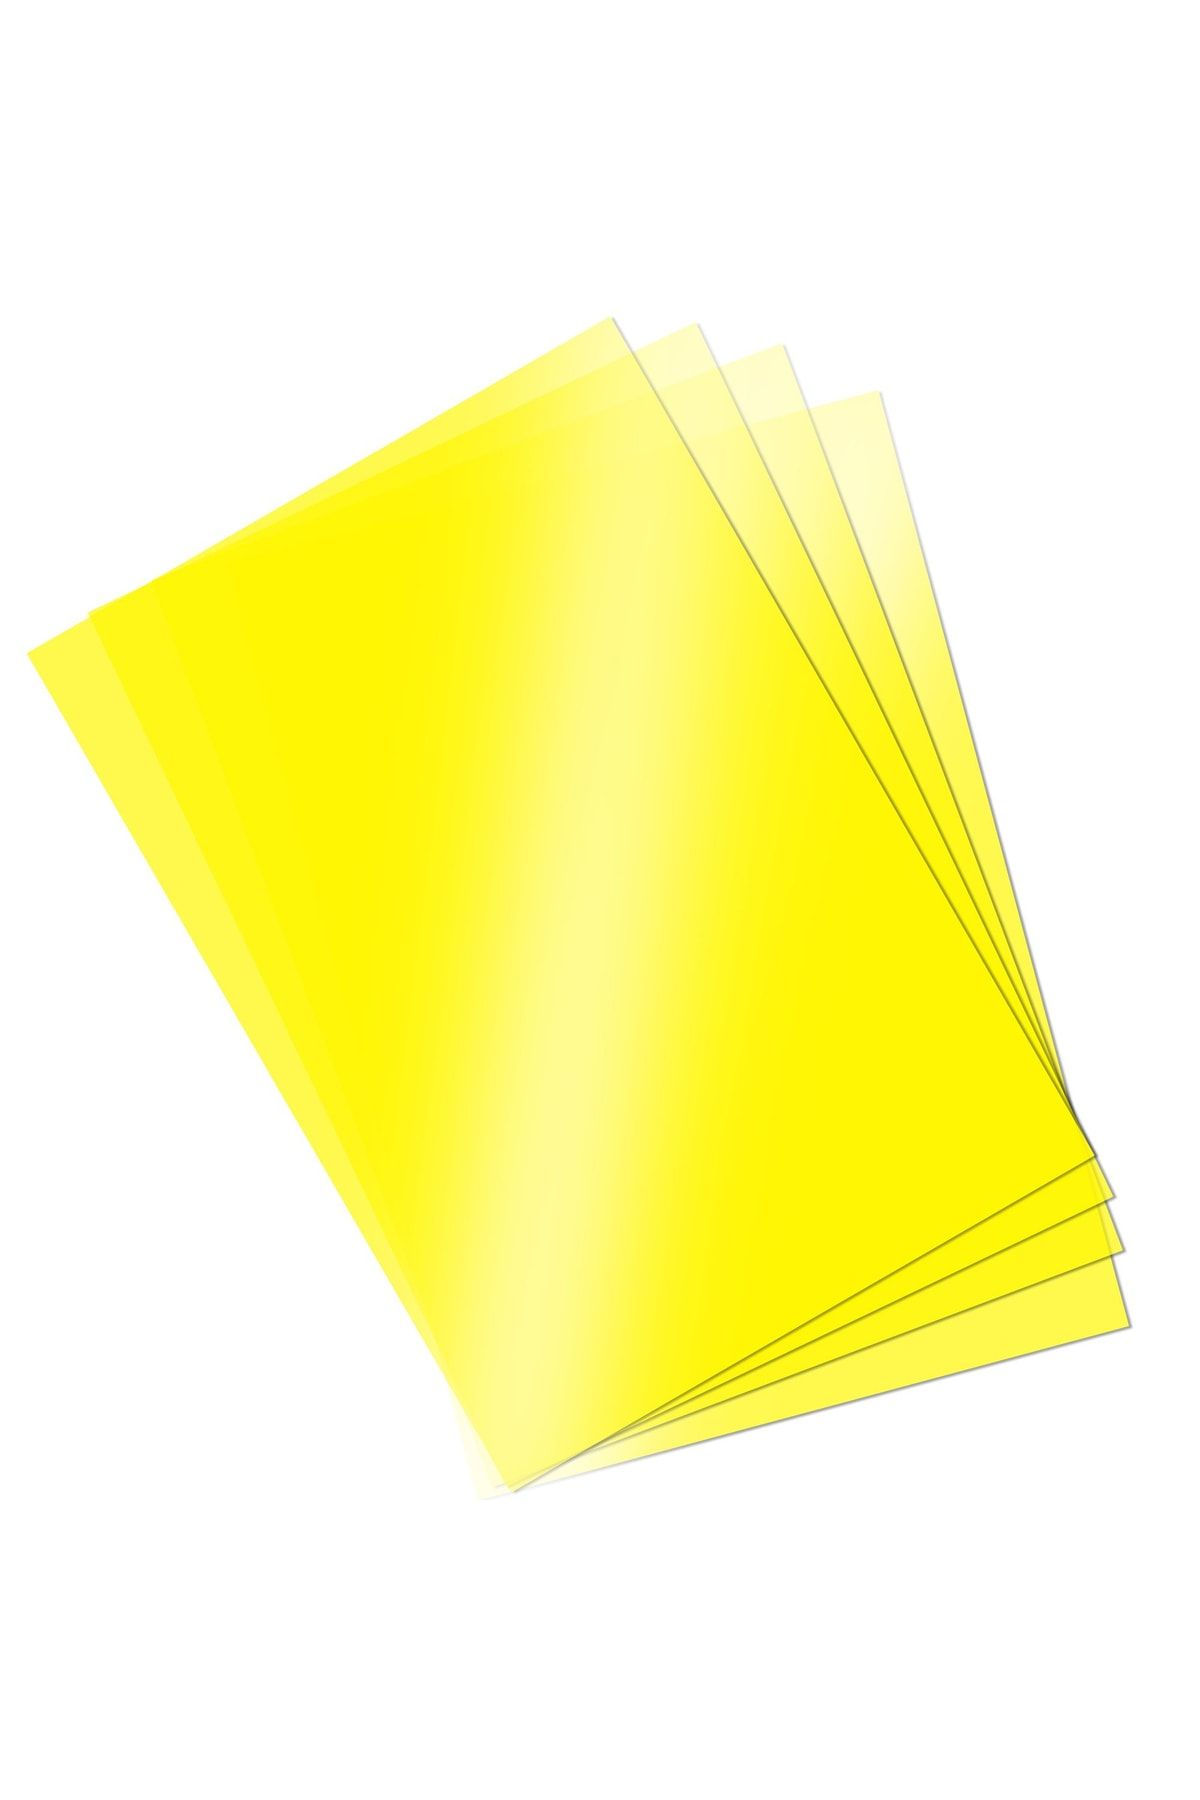 Ümraniye Hobi Sanat Renkli Asetat Kağıdı Pvc 250 Micron A4 Sarı 5'li